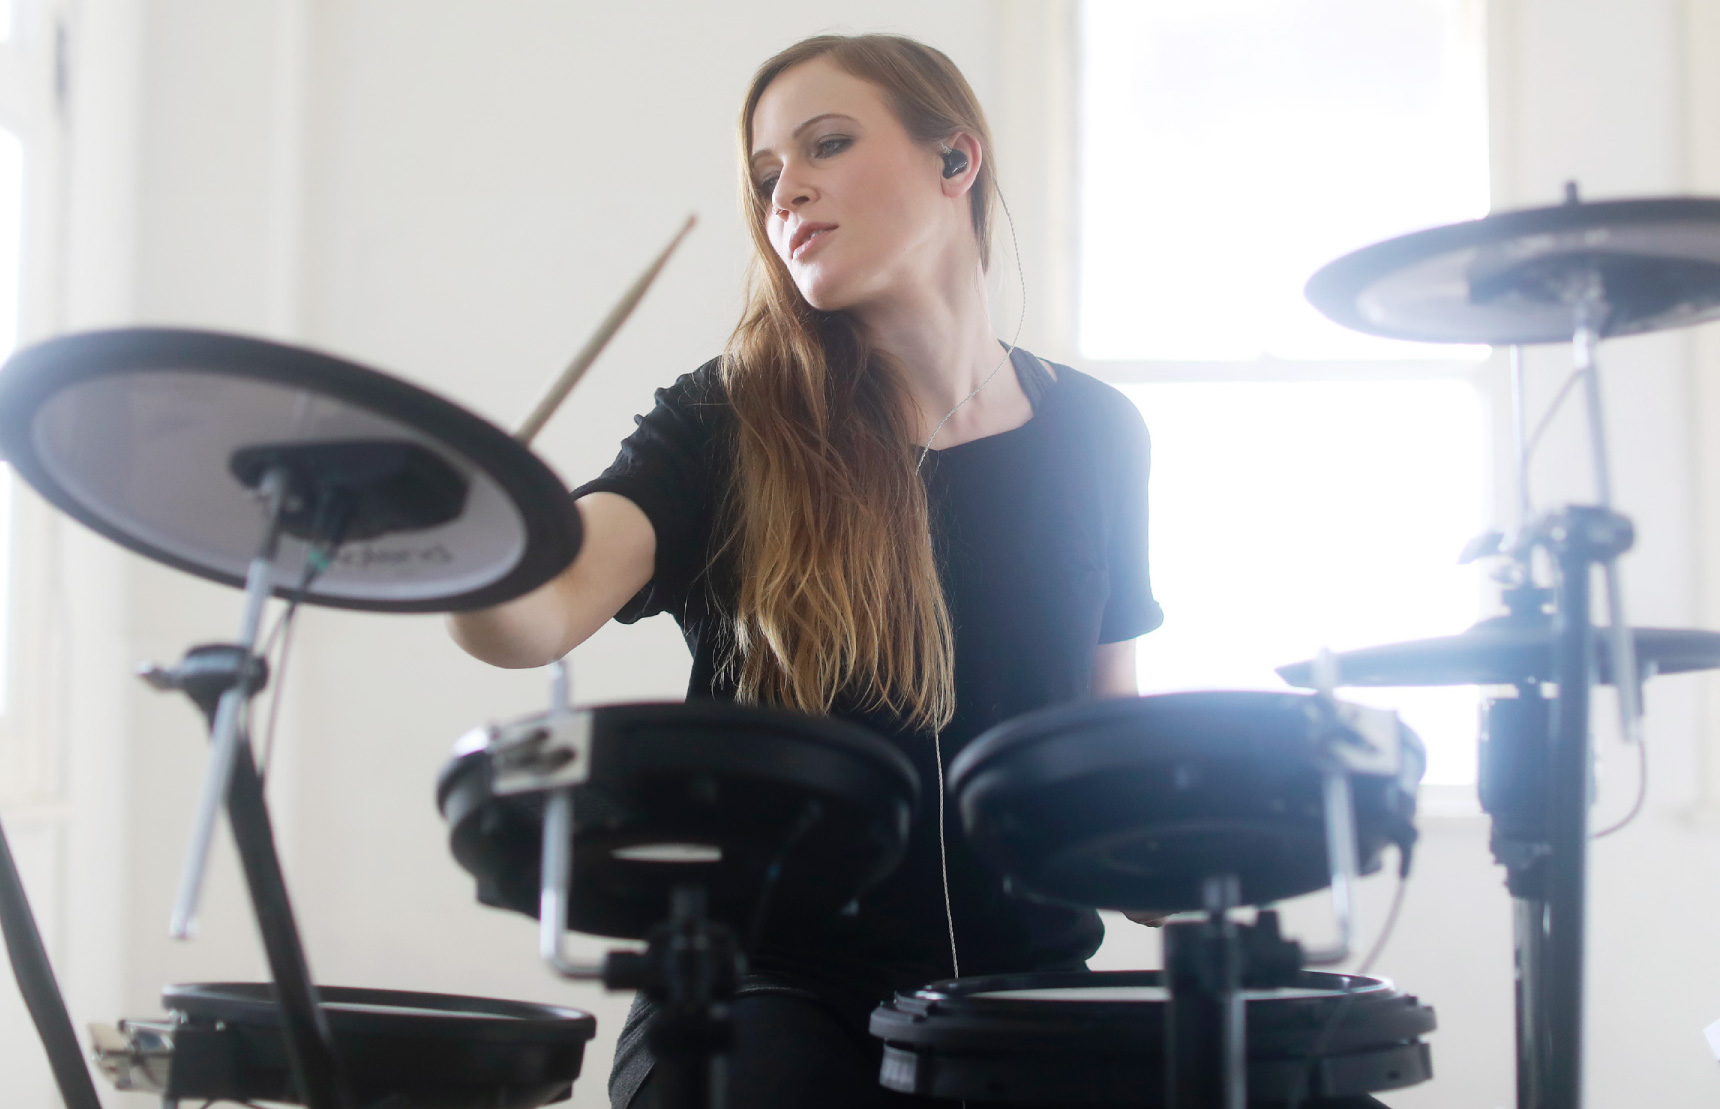 Anika Nilles Plays Roland TD-17 Drum Set